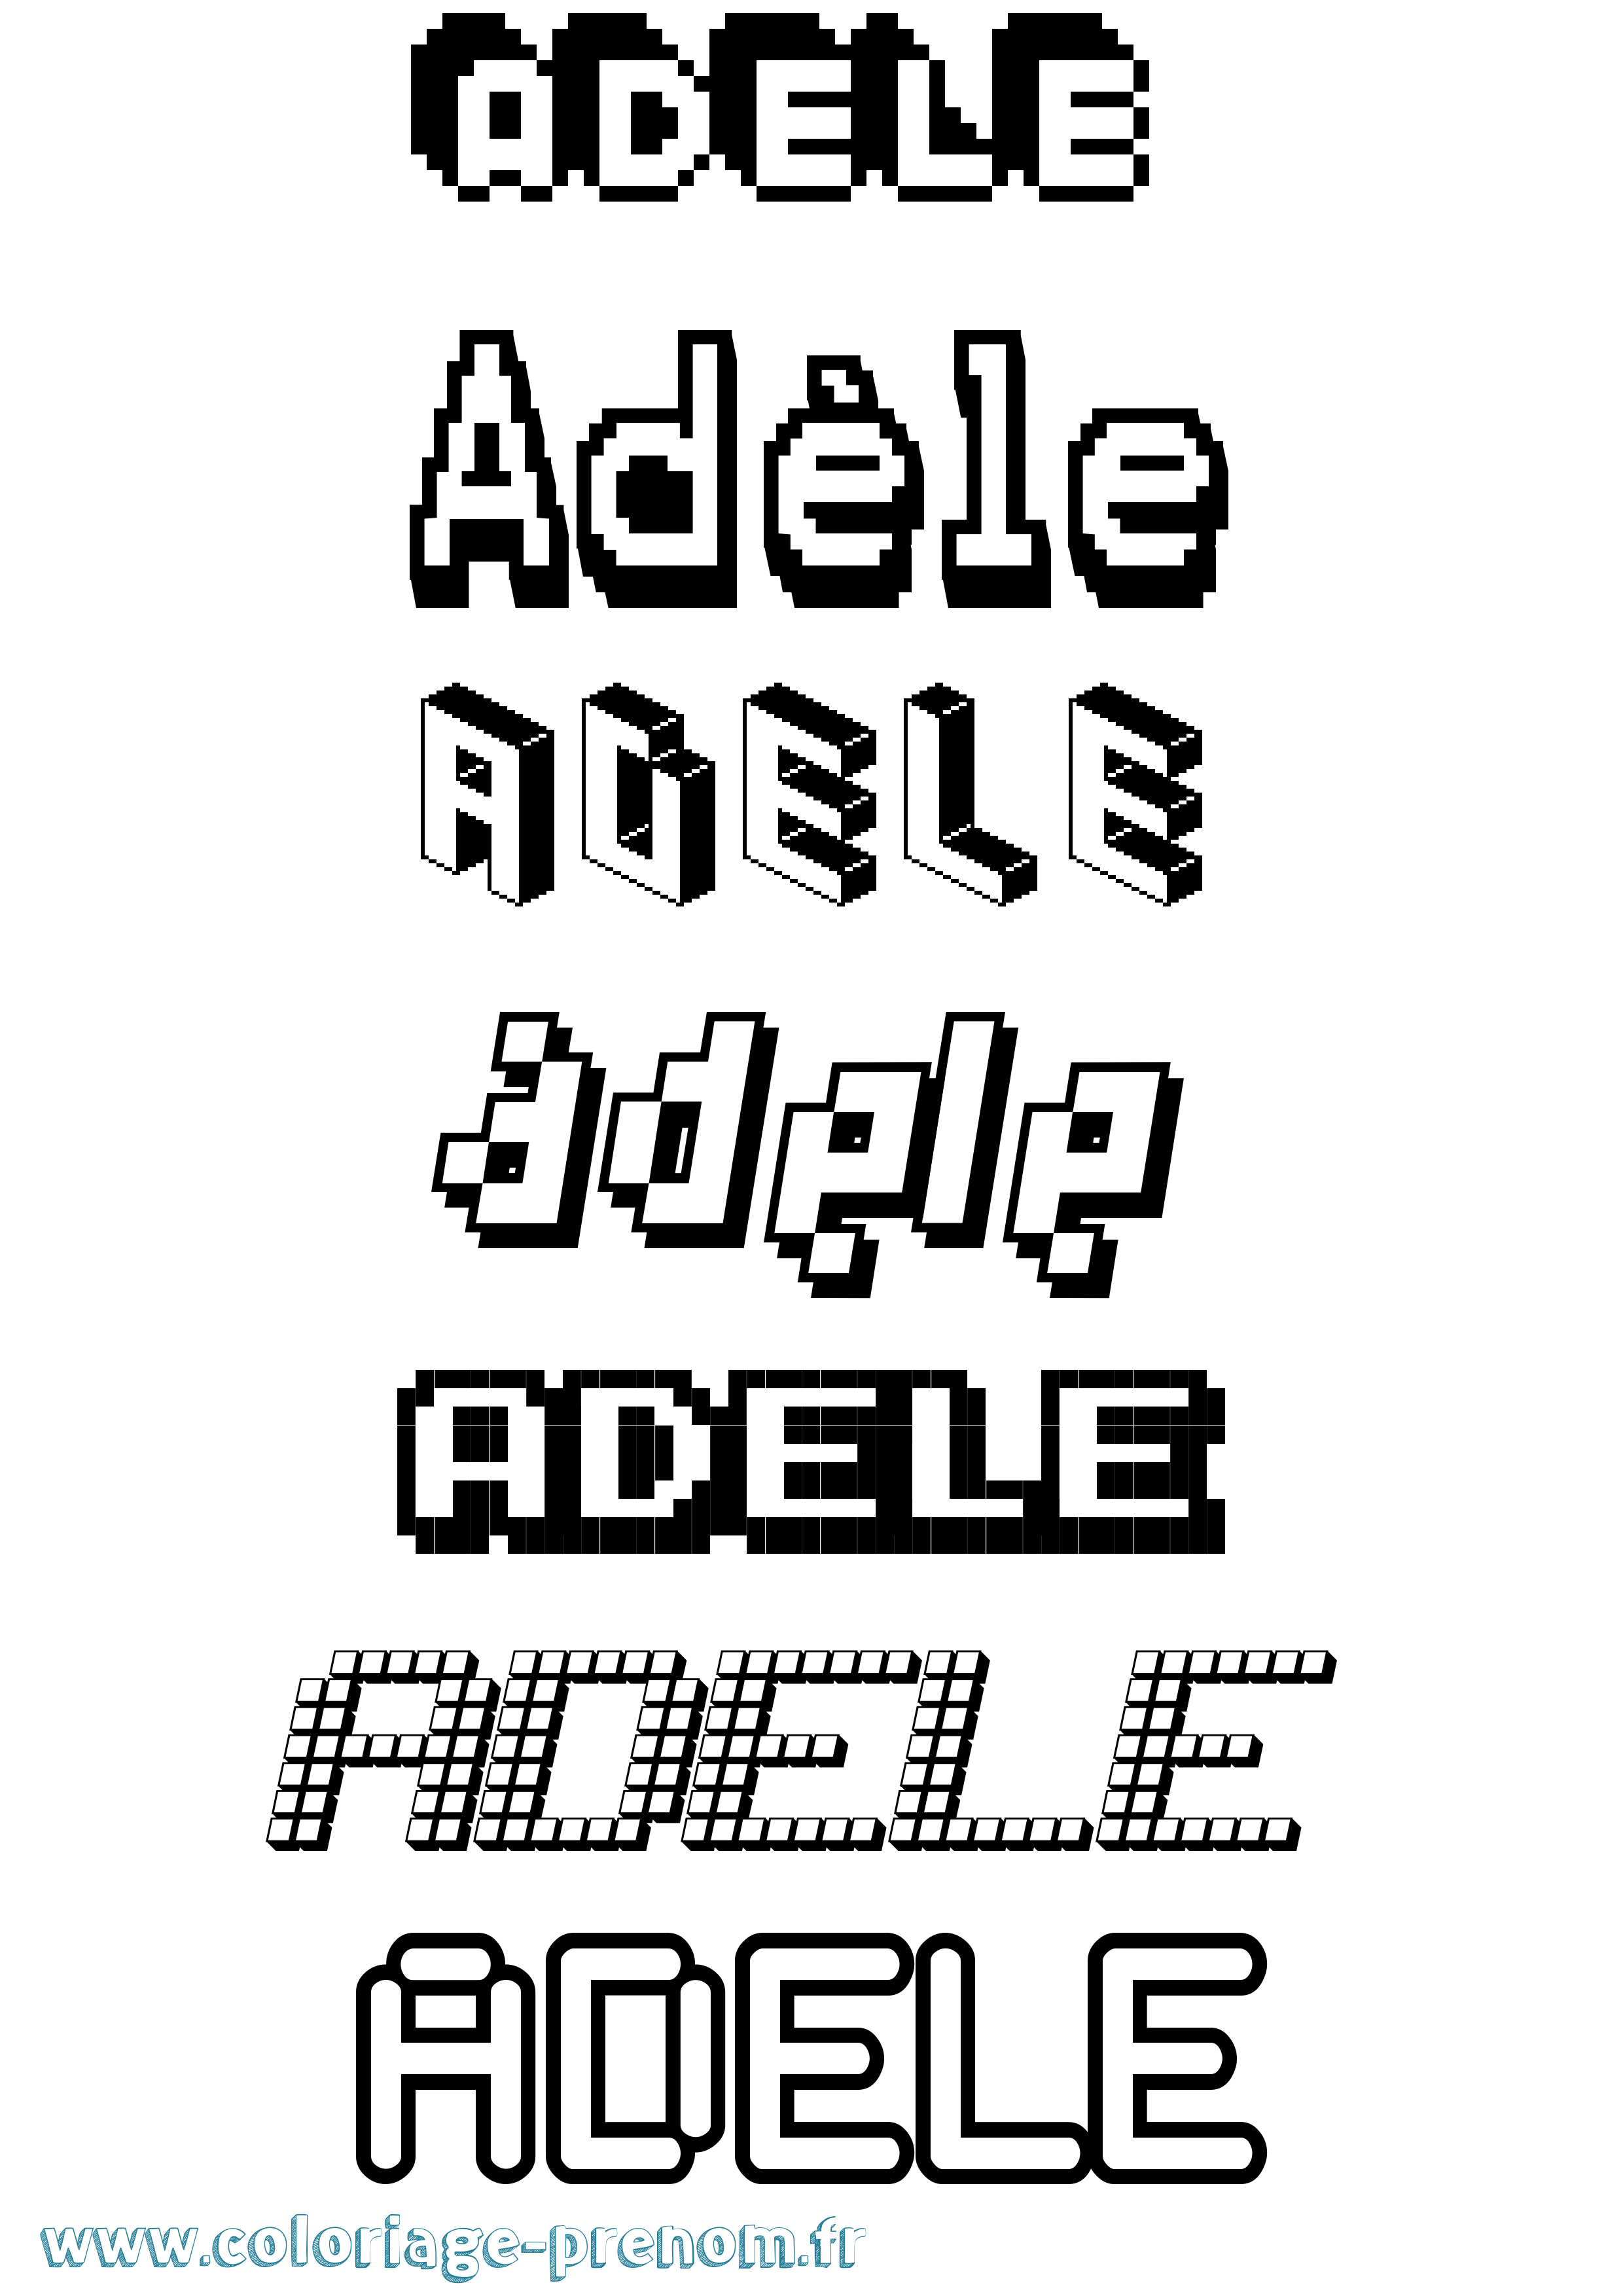 Coloriage prénom Adèle Pixel